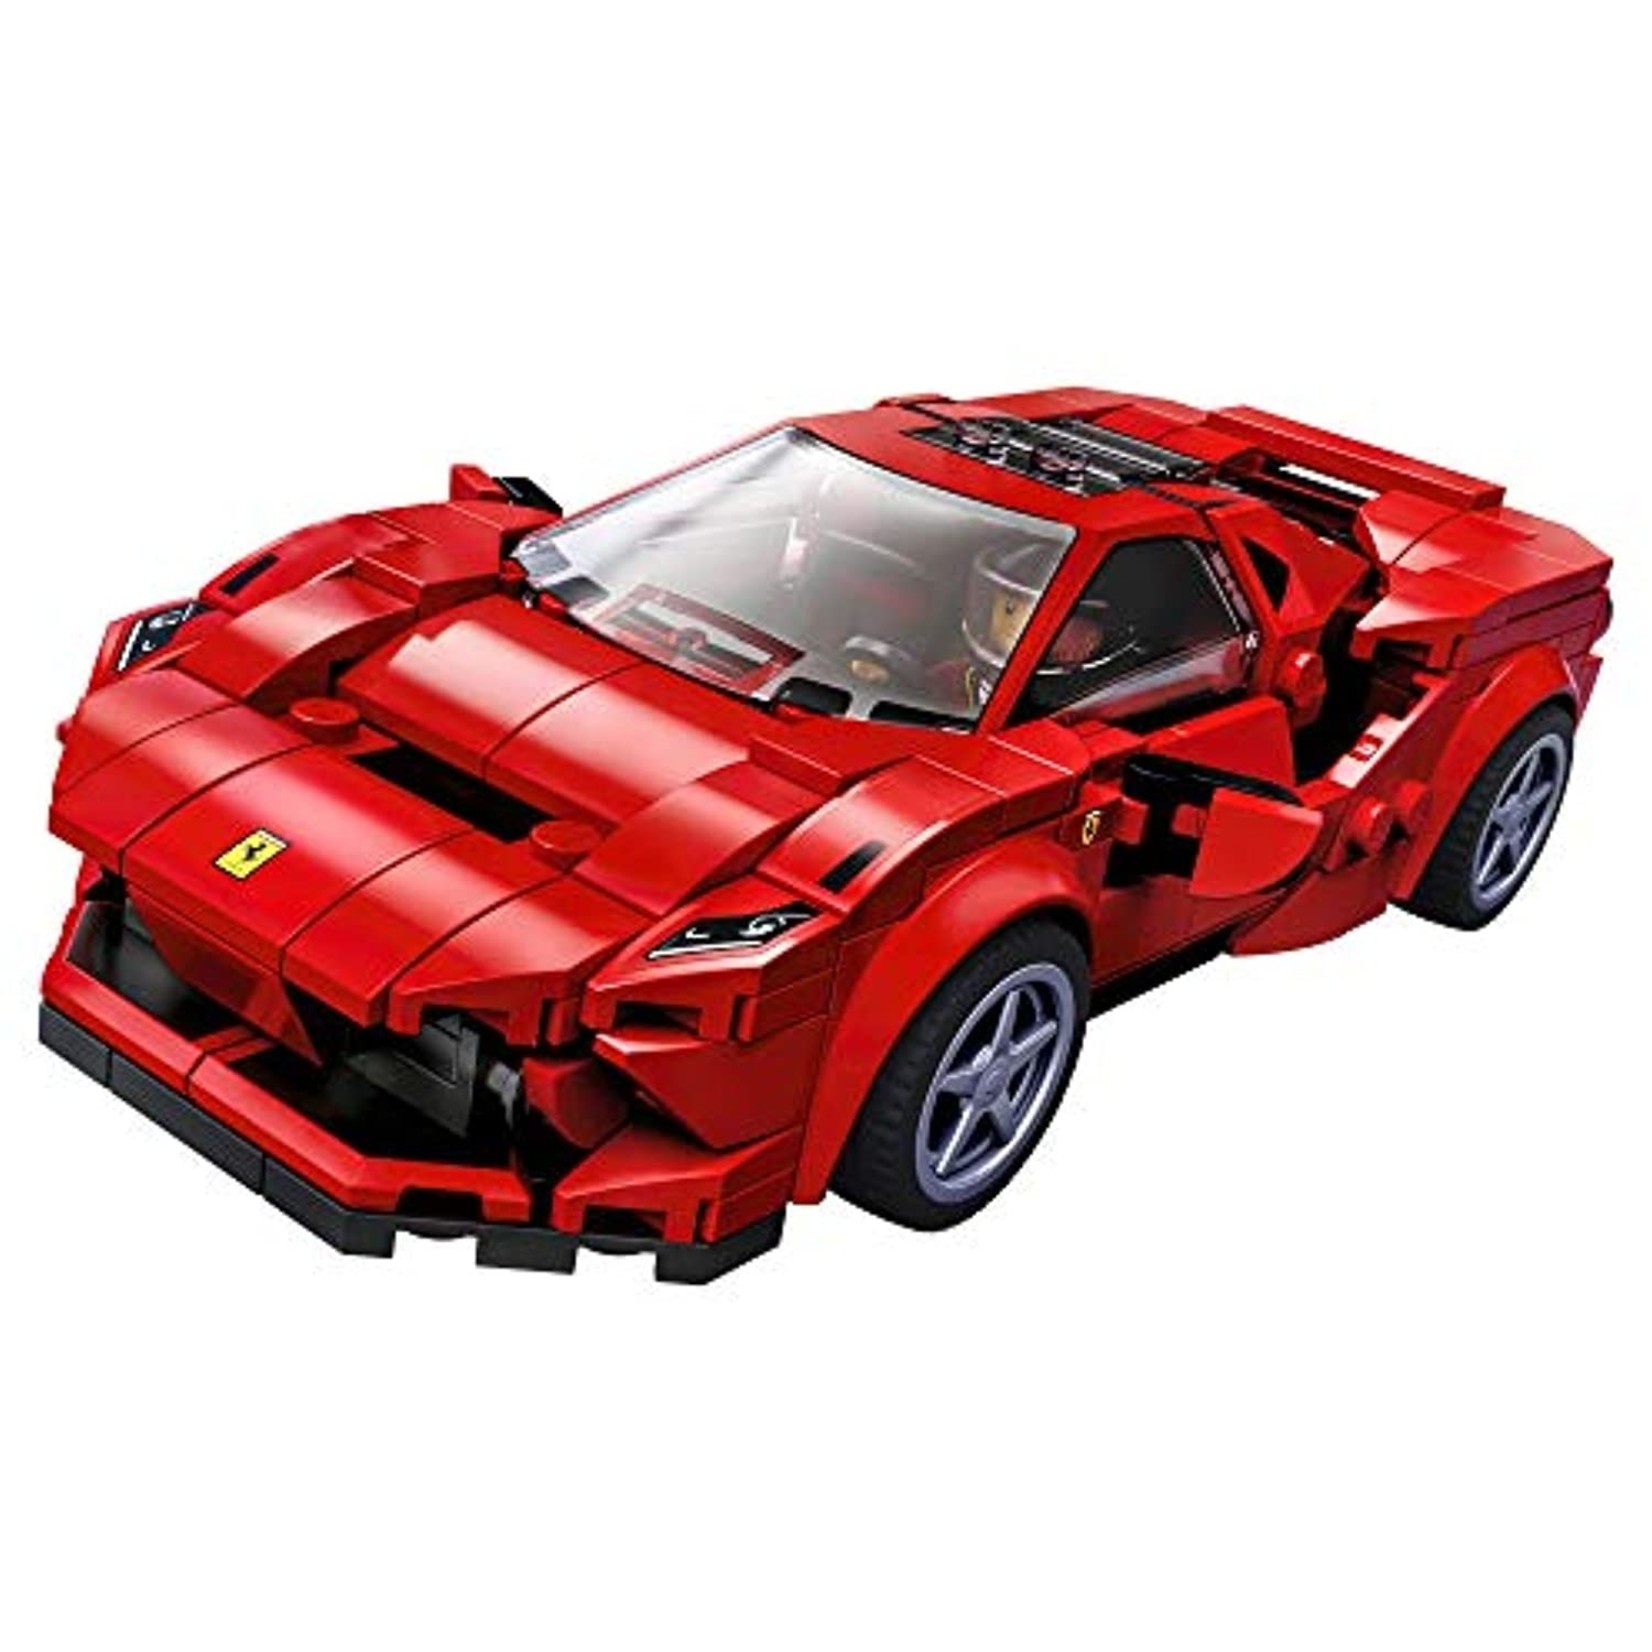 LEGO LEGO Speed Champions Ferrari F8 Tributo 76895